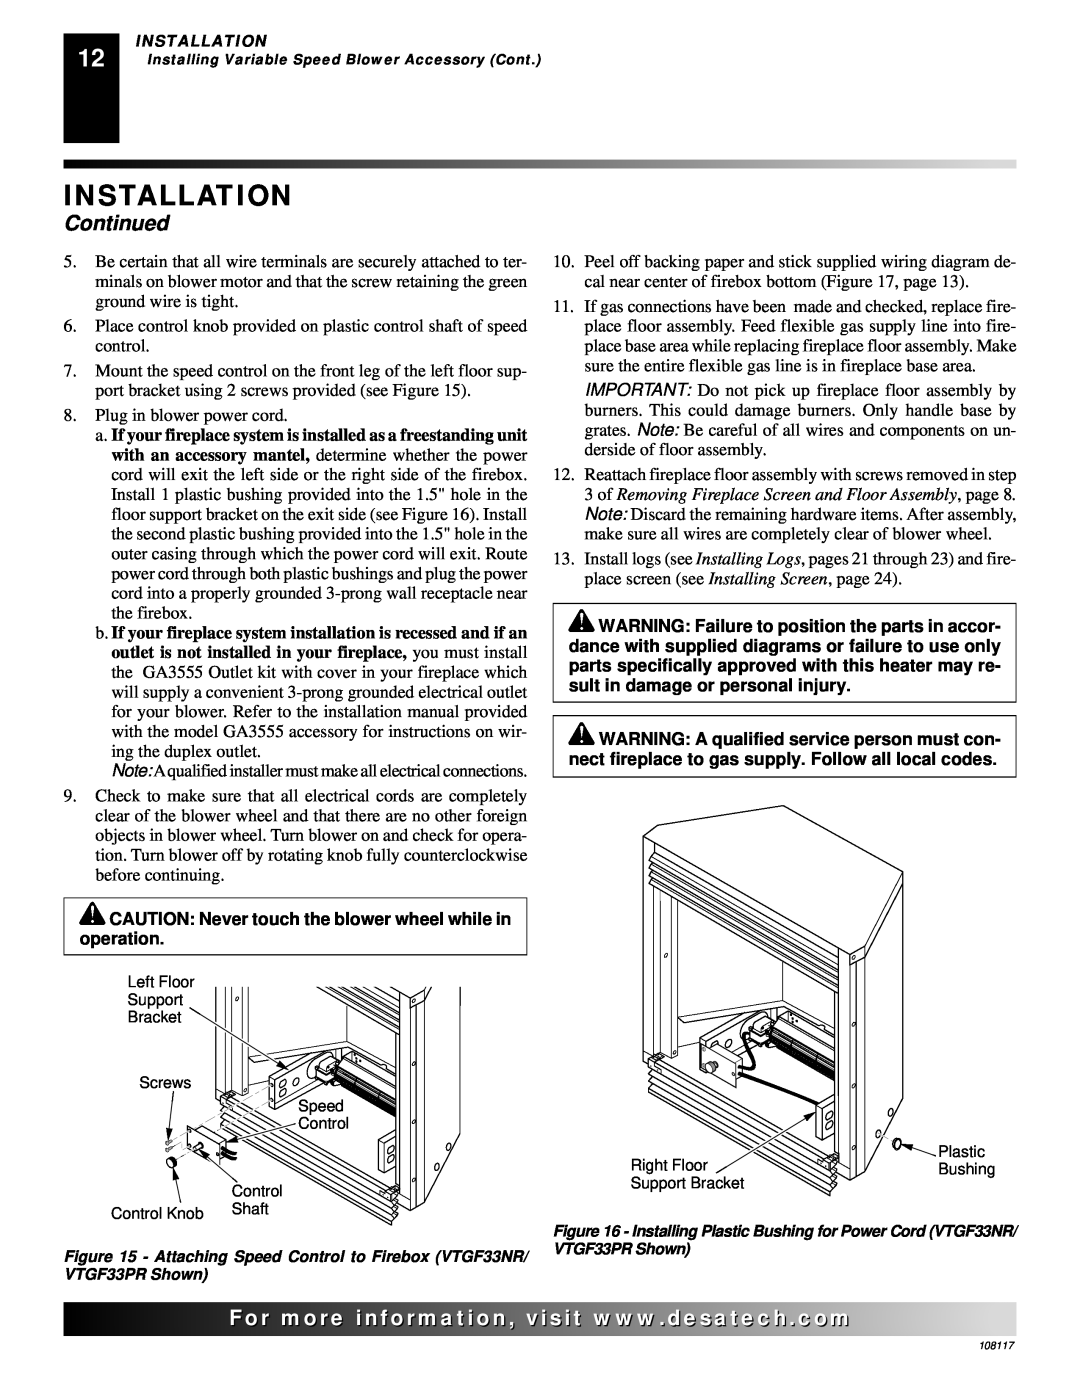 Desa VTGF33NR, VTGF33PR, CGEFP33PR installation manual Installation, Continued, Plug in blower power cord 